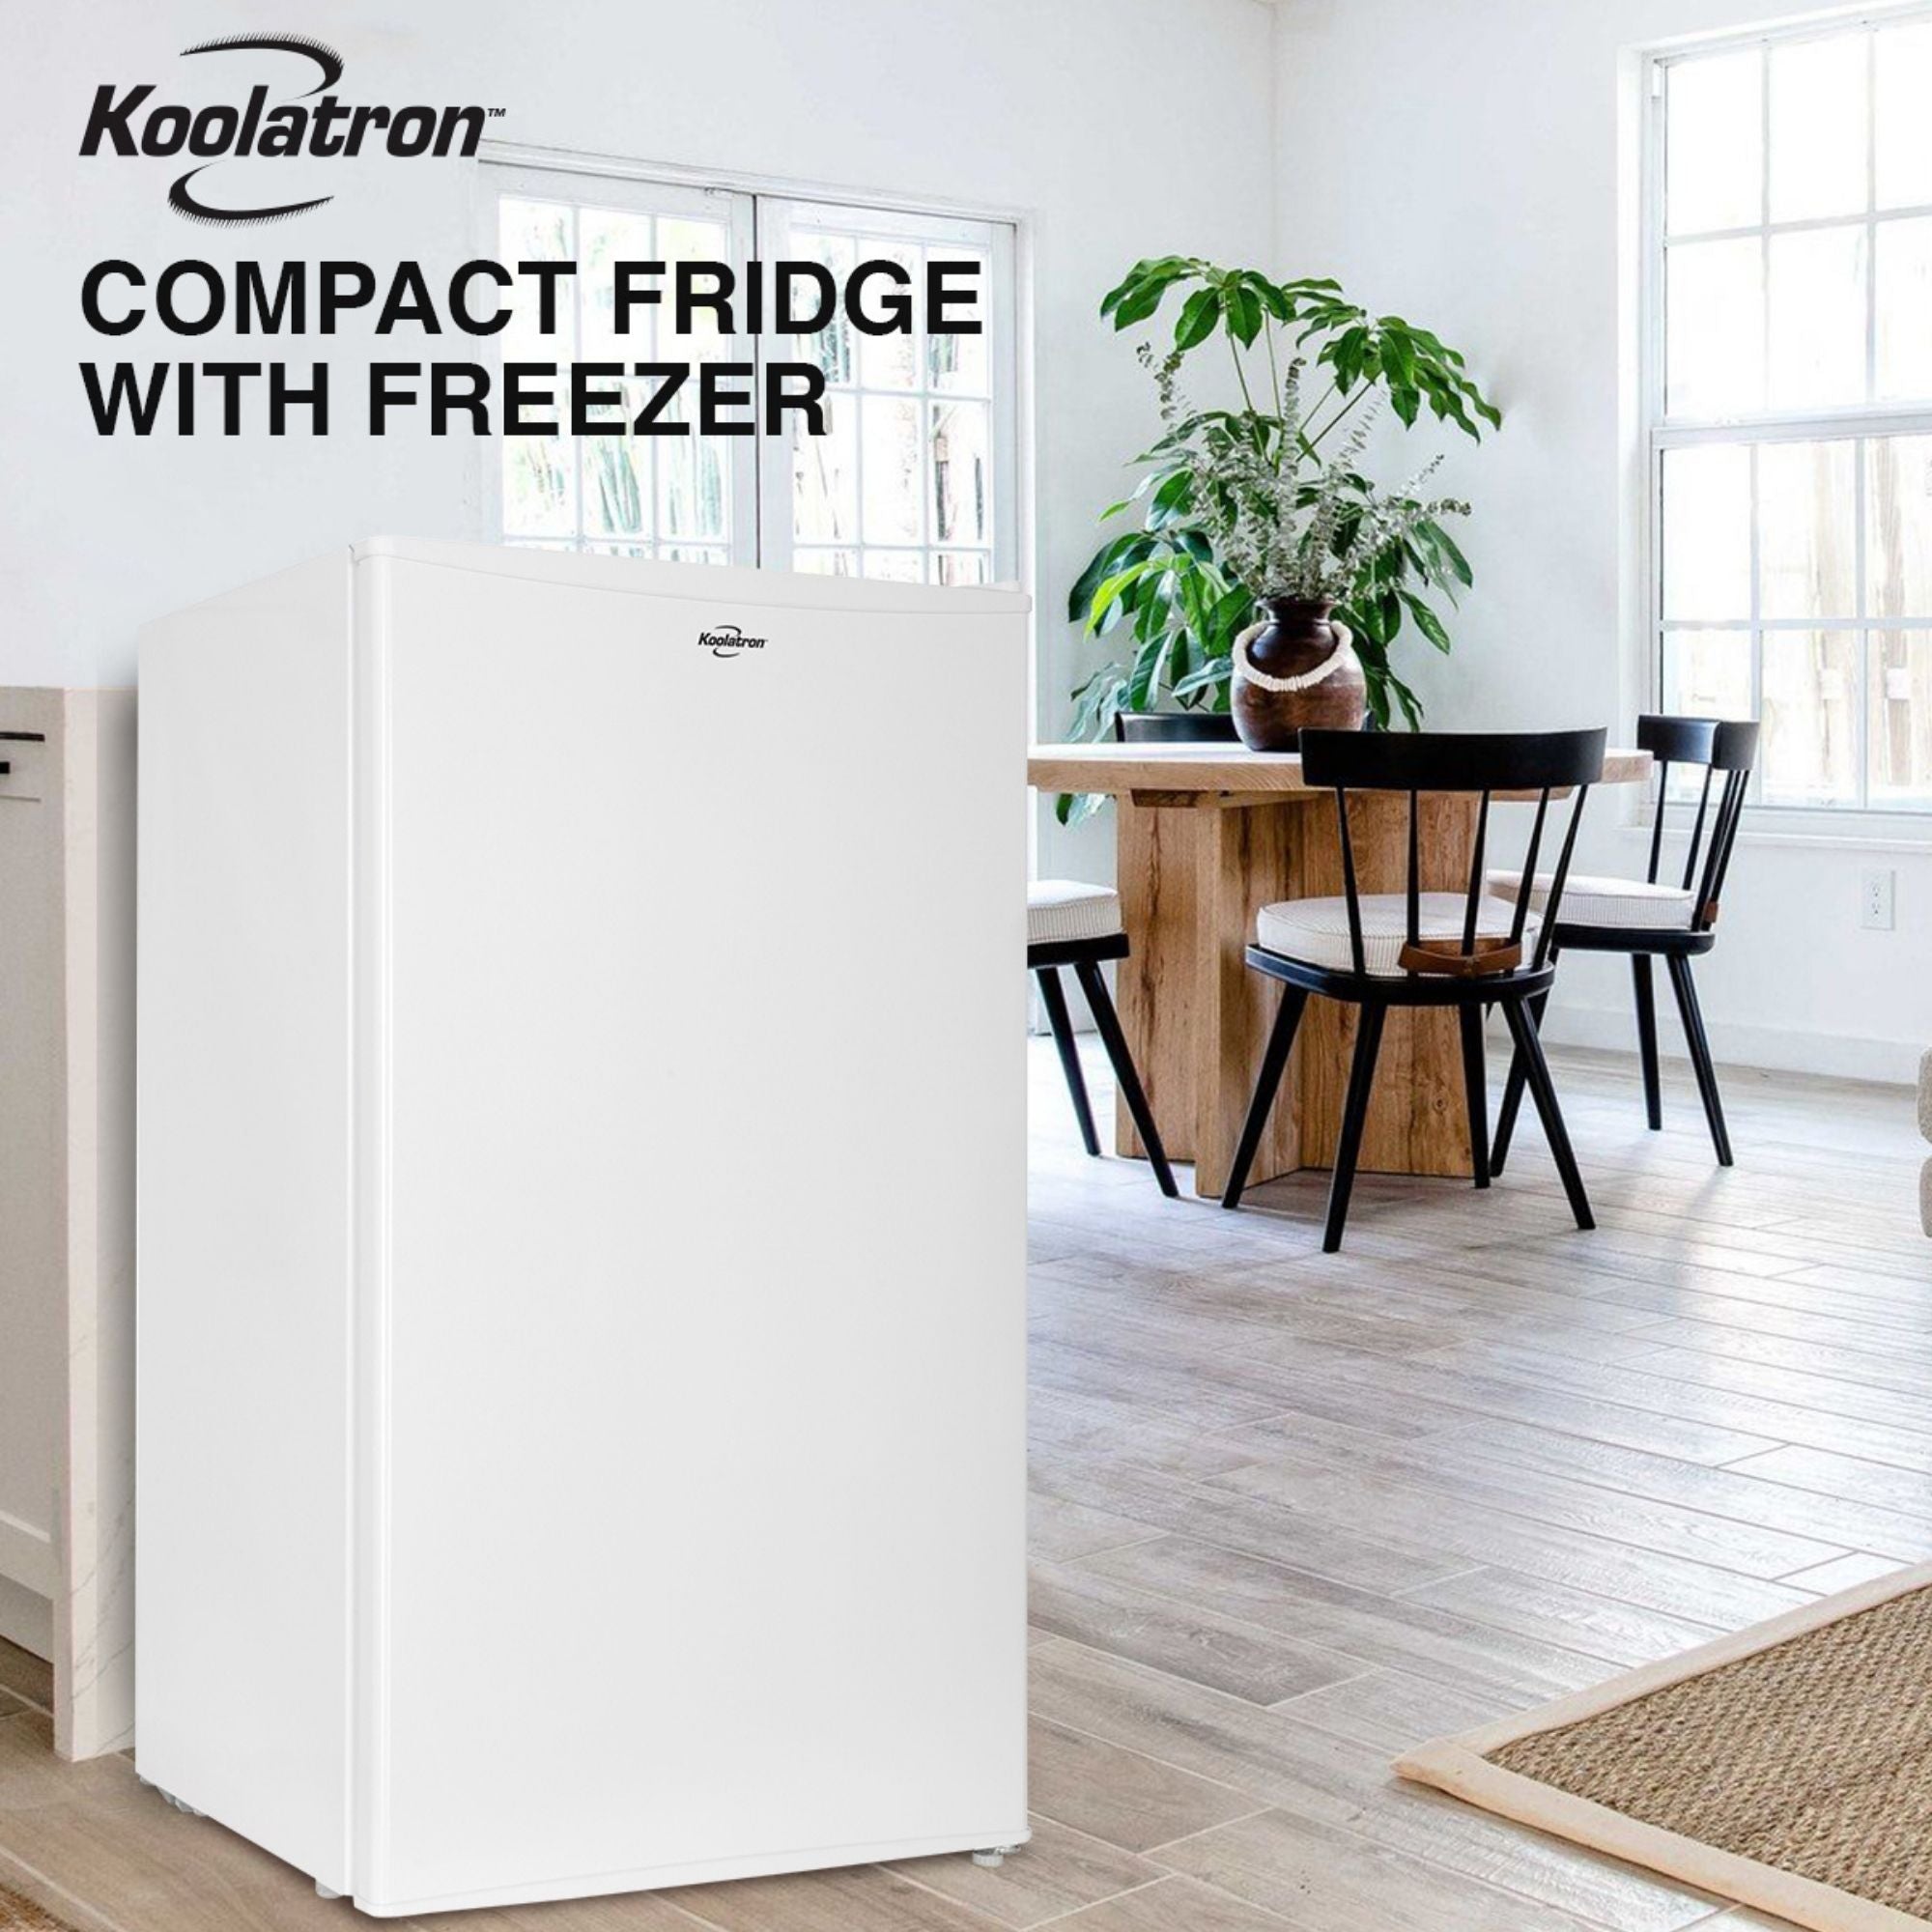  Koolatron Compact Upright Freezer, 5.3 cu ft (150L), White,  Manual Defrost Design, Space-Saving Flat Back, Reversible Door, for Home,  Apartment, Condo, Cottage : Appliances